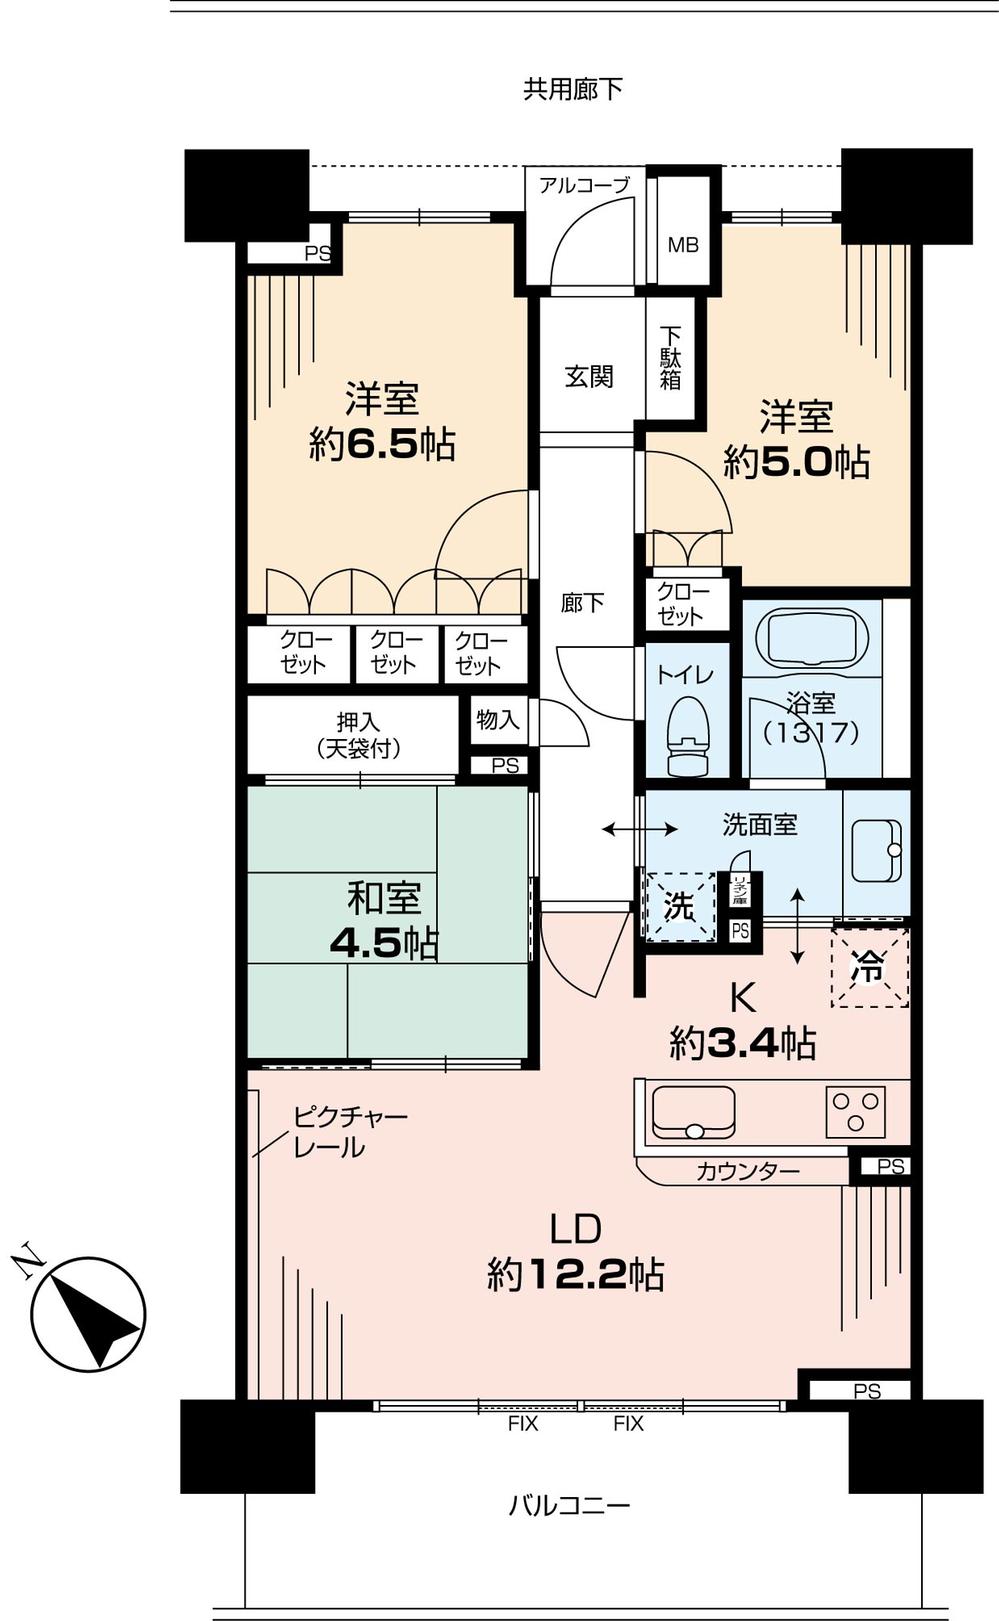 Floor plan. 3LDK, Price 30,900,000 yen, Occupied area 70.41 sq m , Balcony area 12.5 sq m